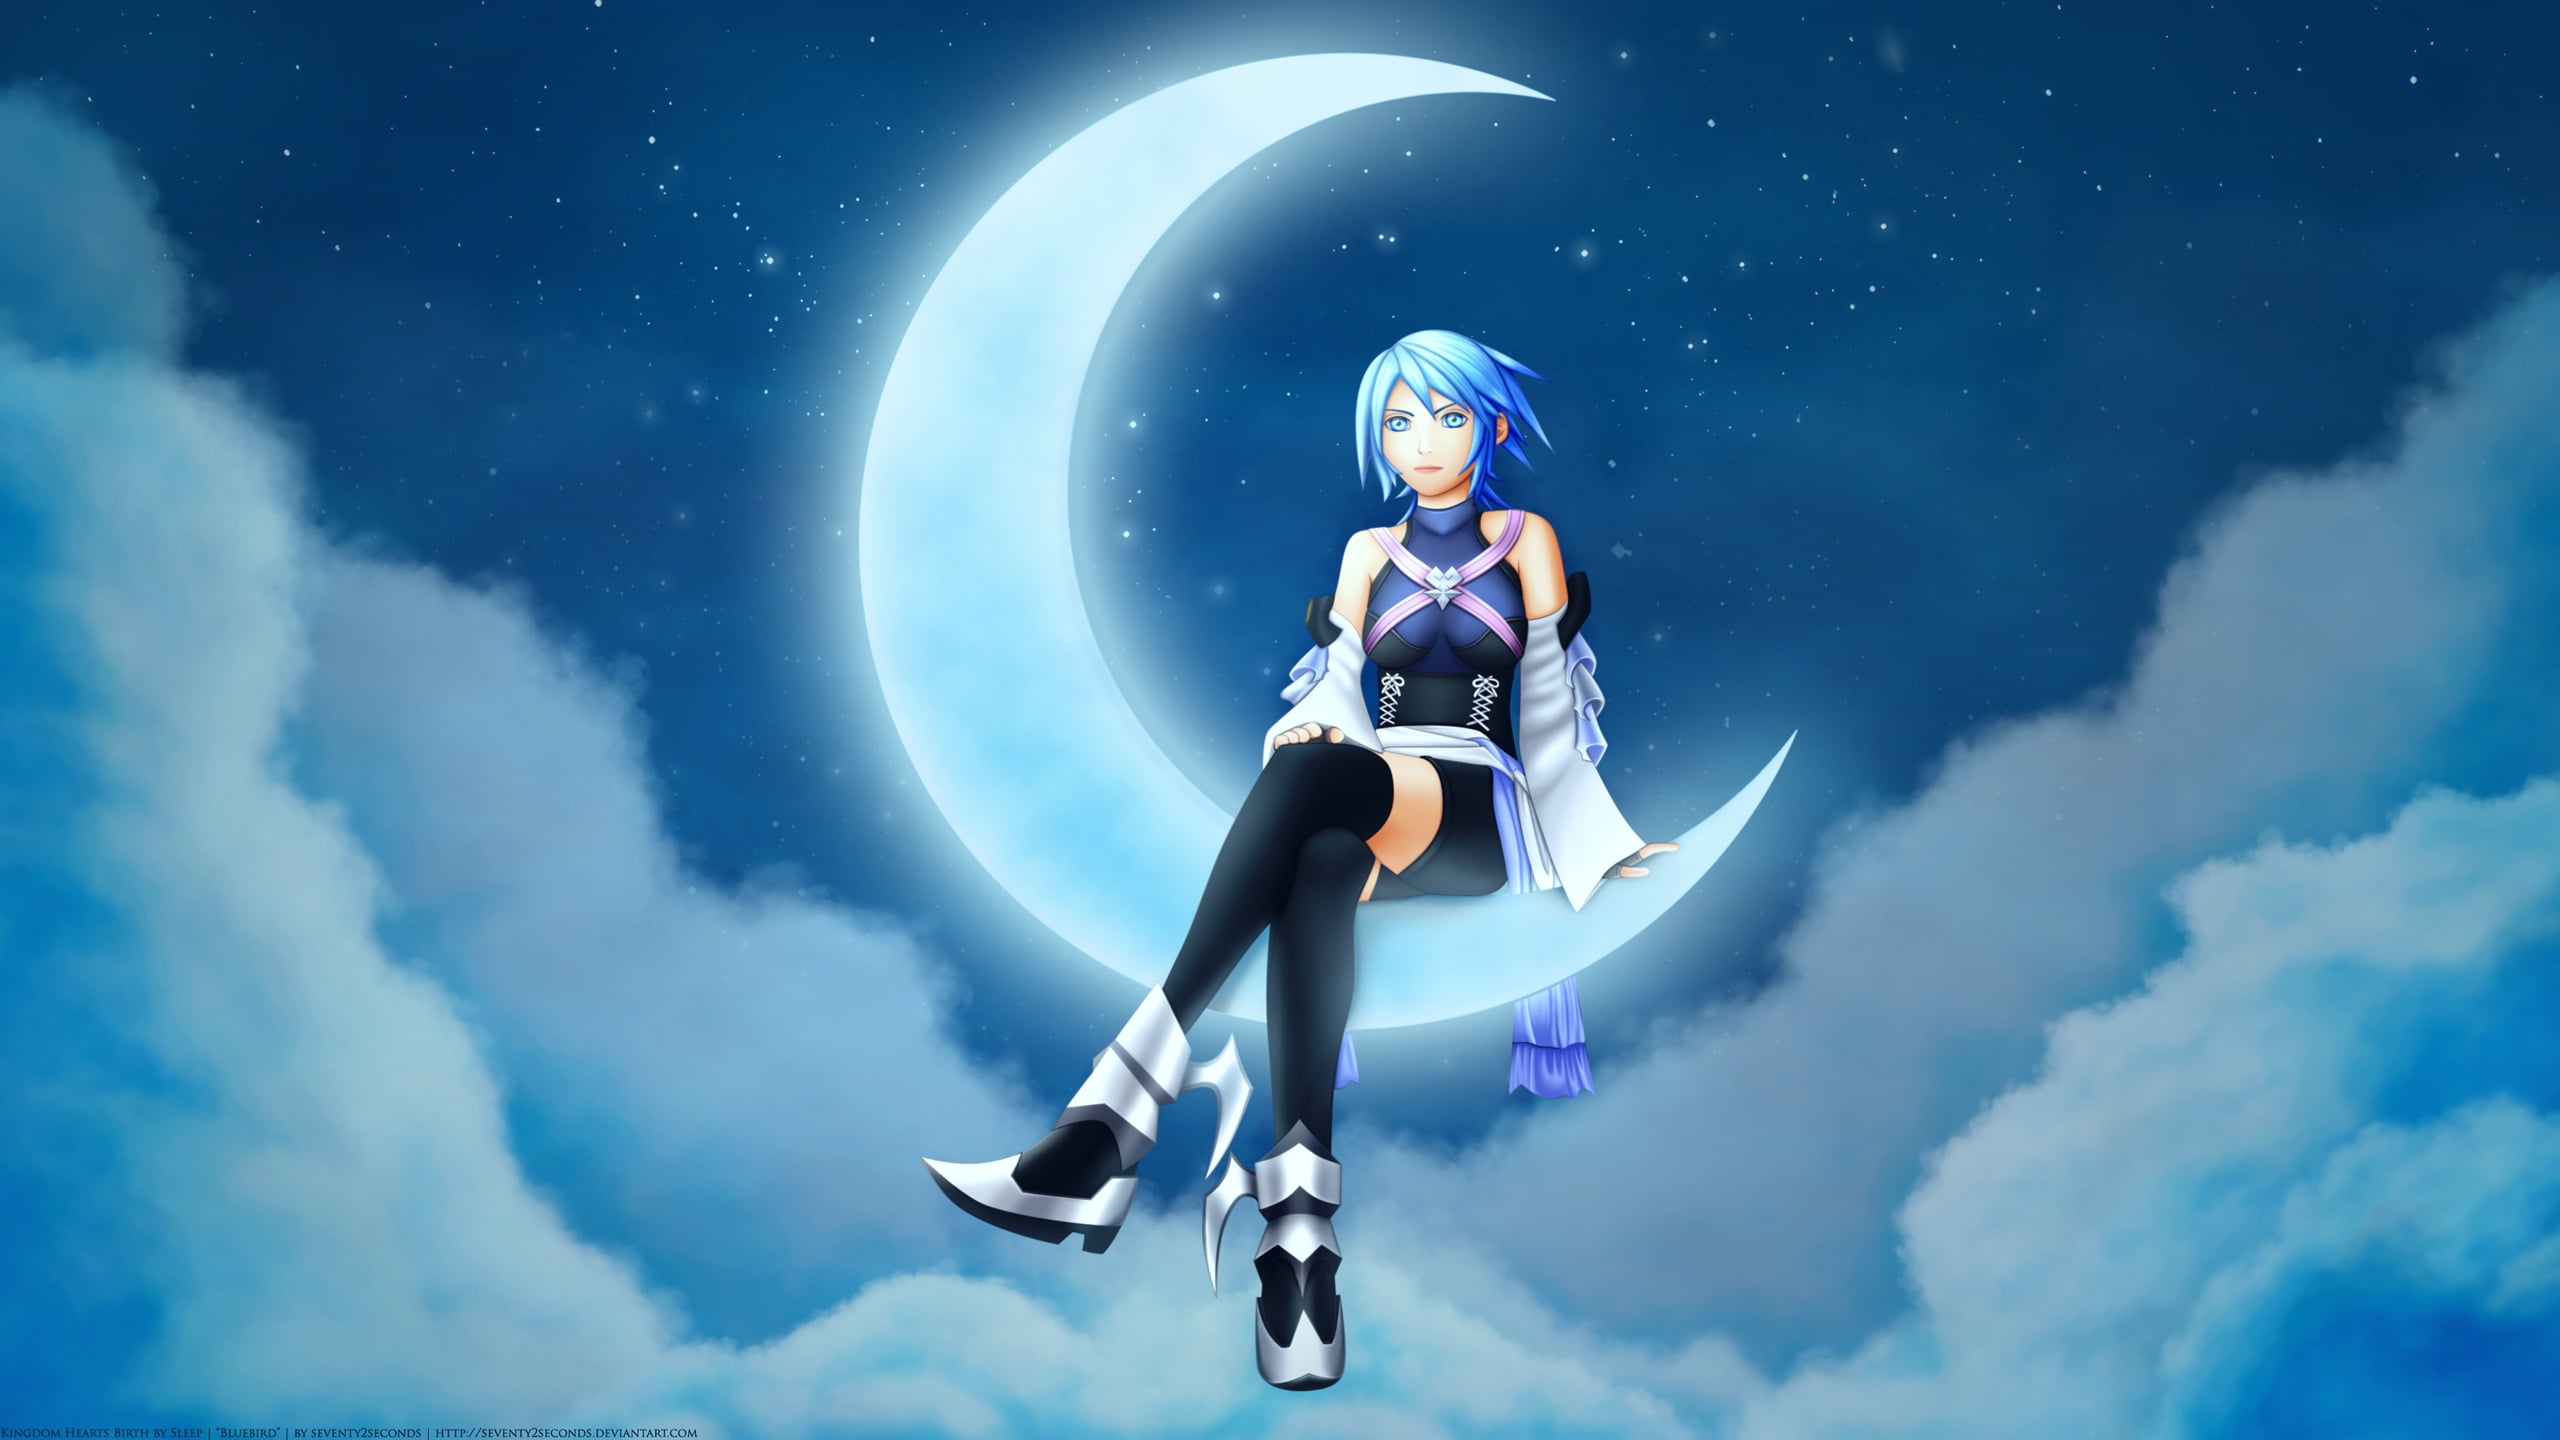 Aqua from Kingdom Hearts illustration